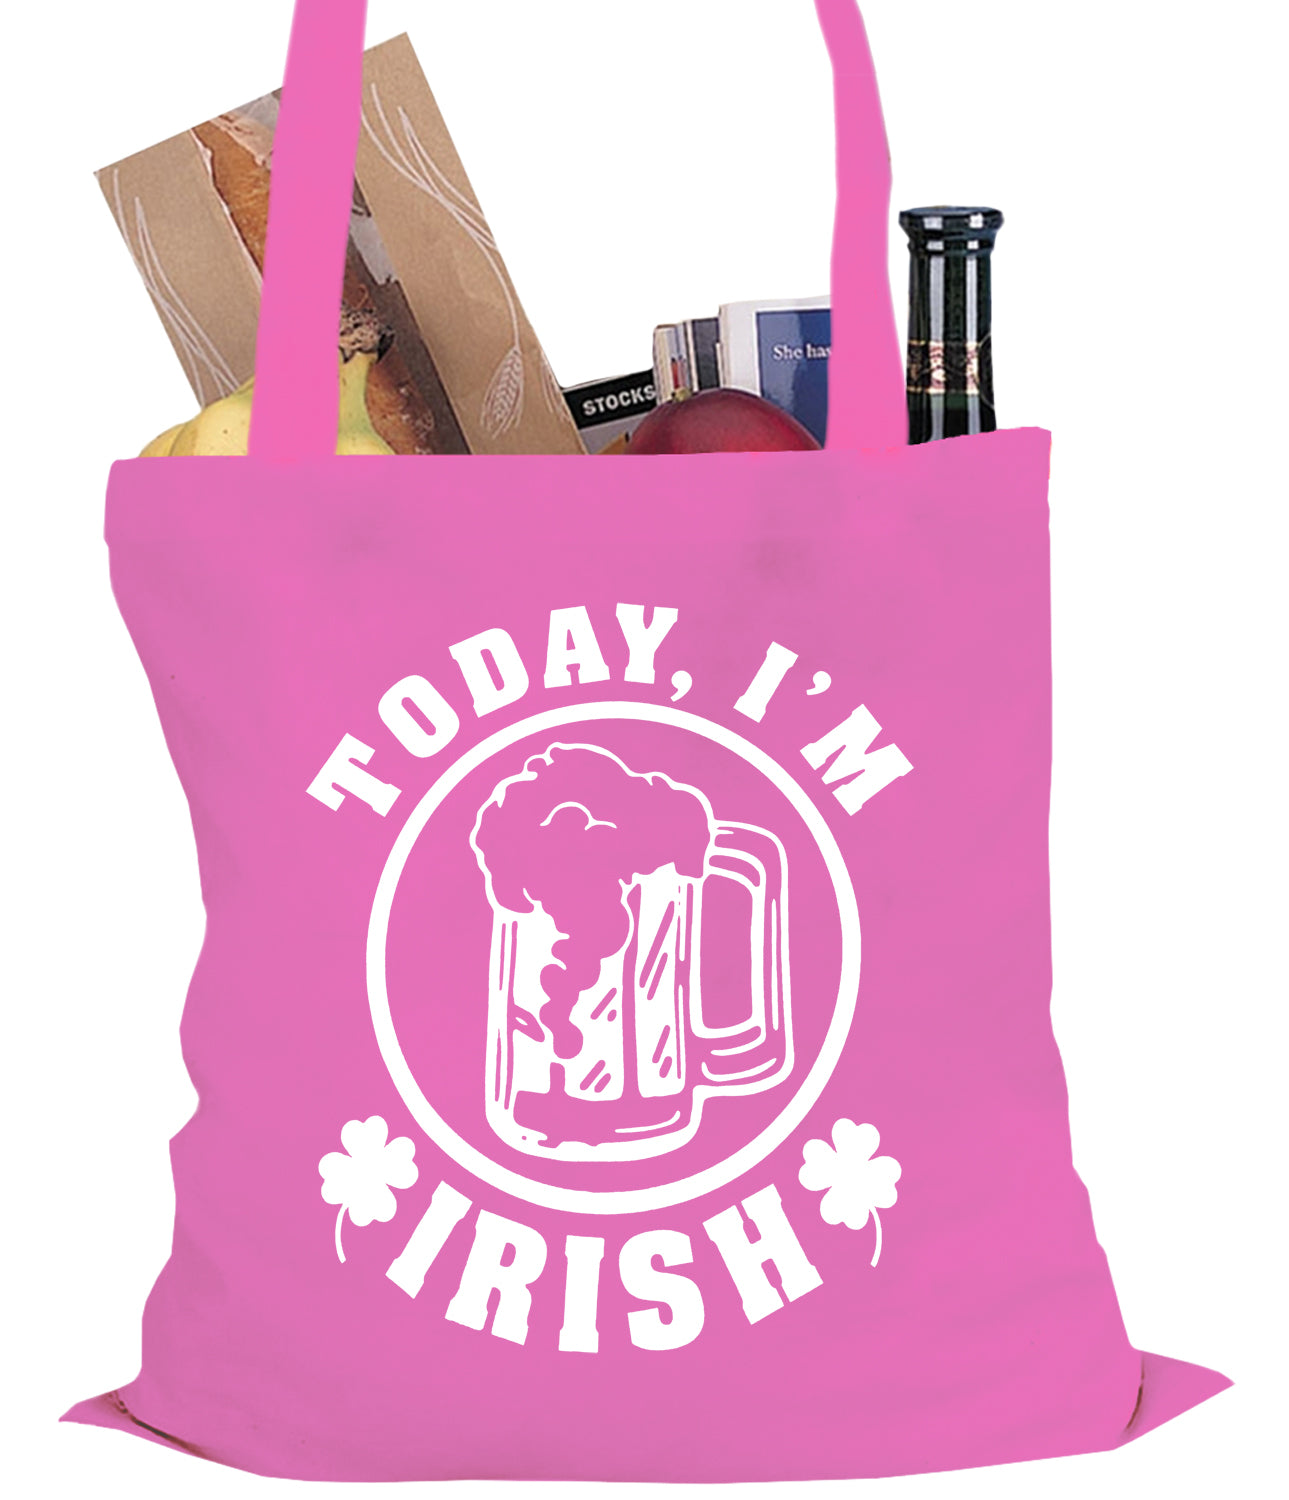 Today I'm Irish St. Patrick's Day Tote Bag